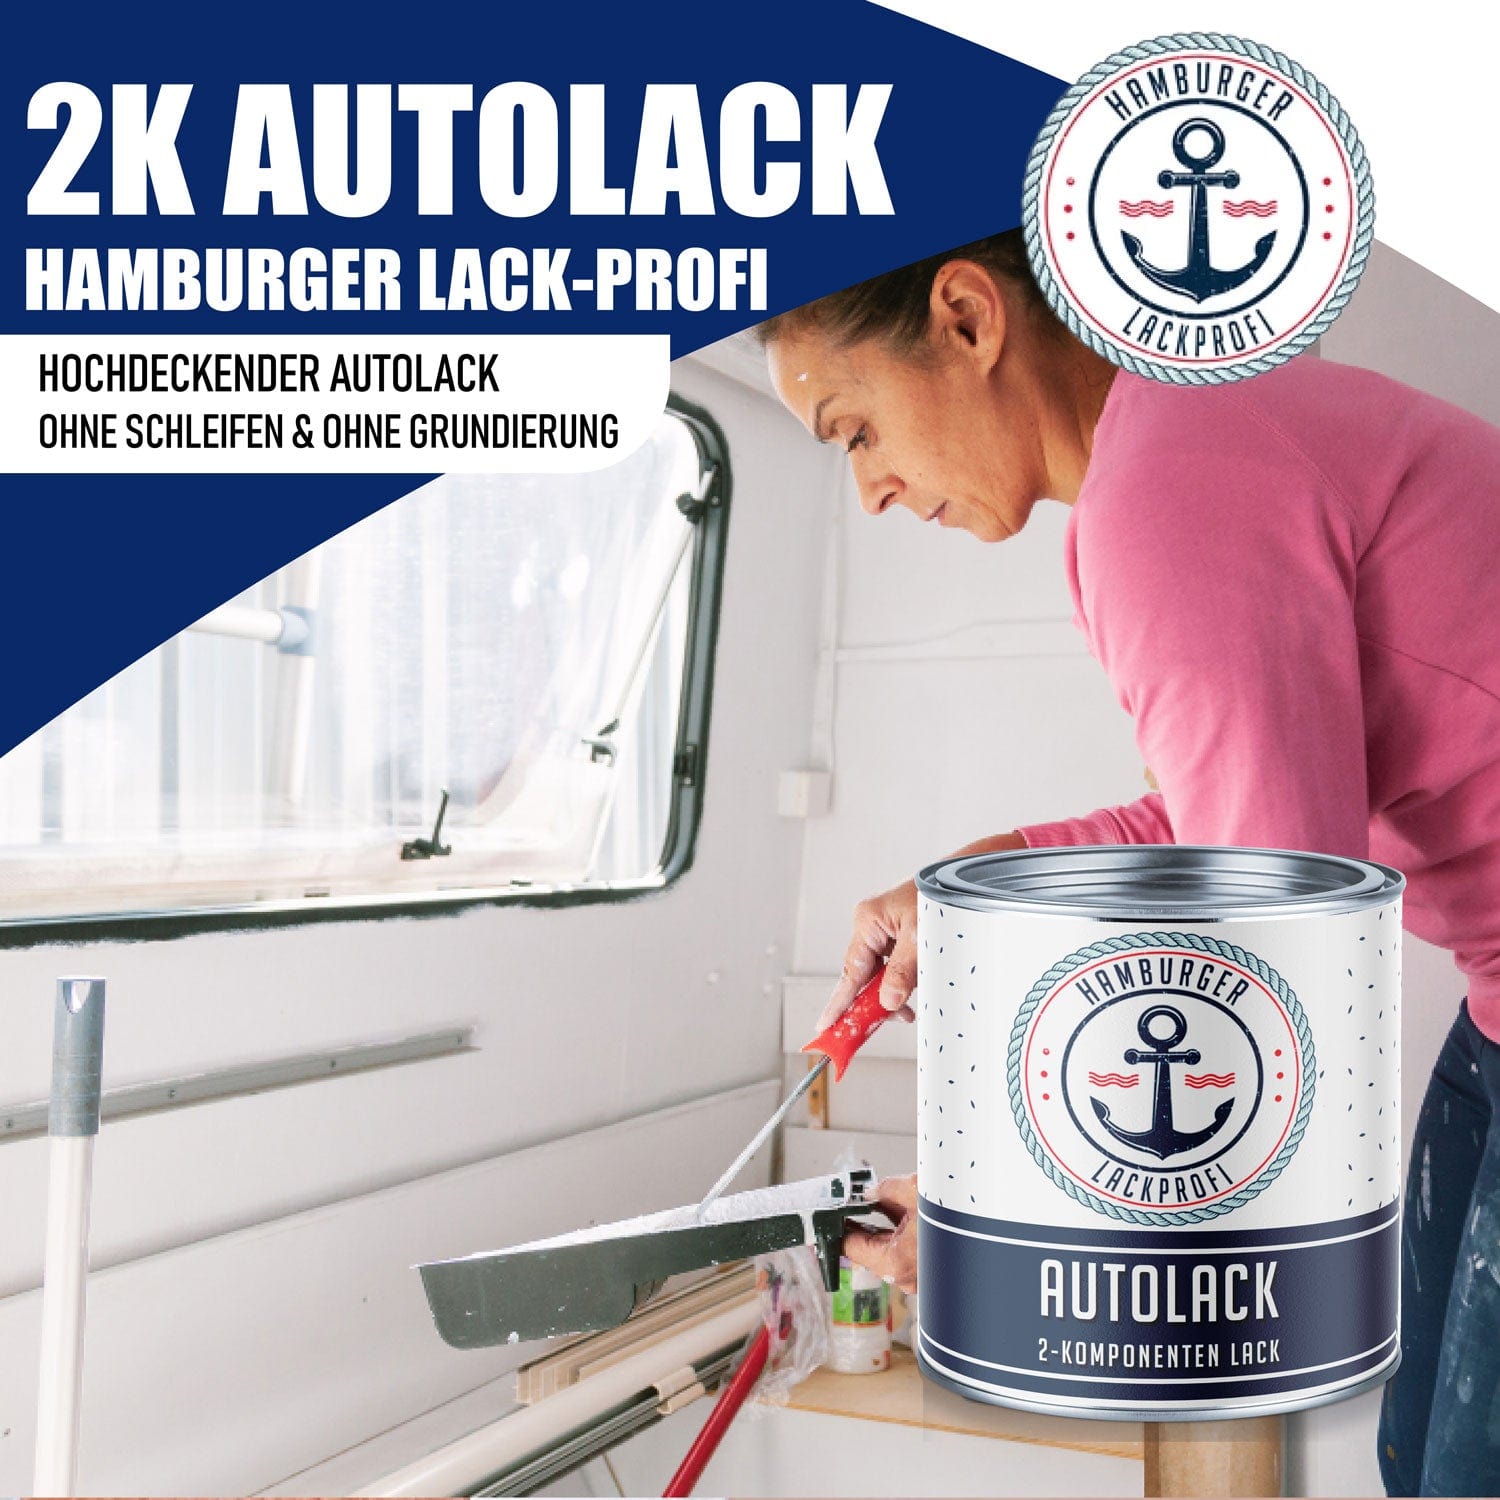 Hamburger Lack-Profi Lacke & Beschichtungen Hamburger Lack-Profi 2K Autolack in Olivgrün RAL 6003 mit Lackierset (X300) & Verdünnung (1 L) - 30% Sparangebot